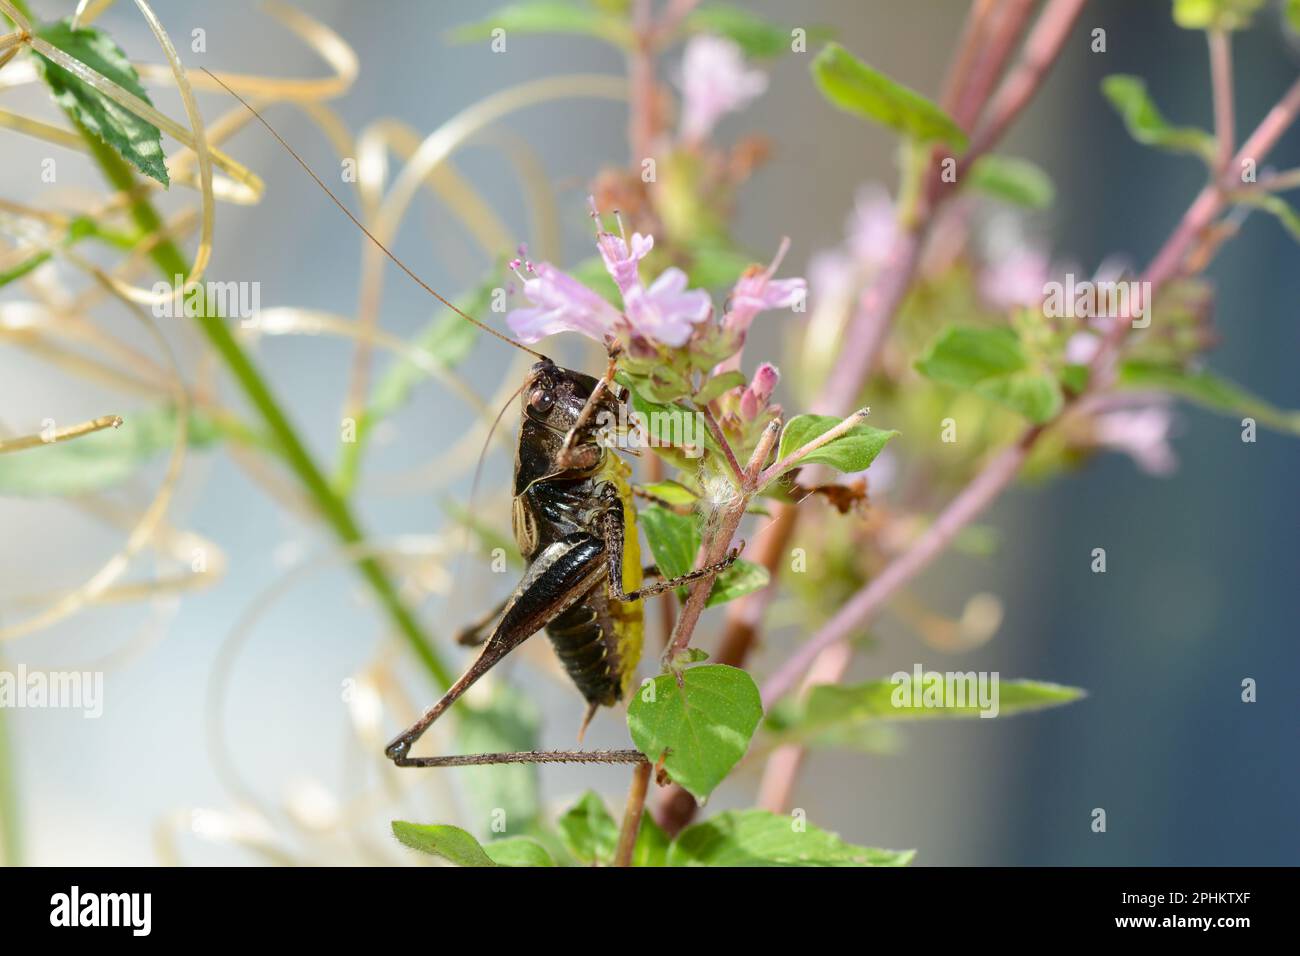 Common bush cricket ( Pholidoptera griseoaptera ) on a plant Stock Photo